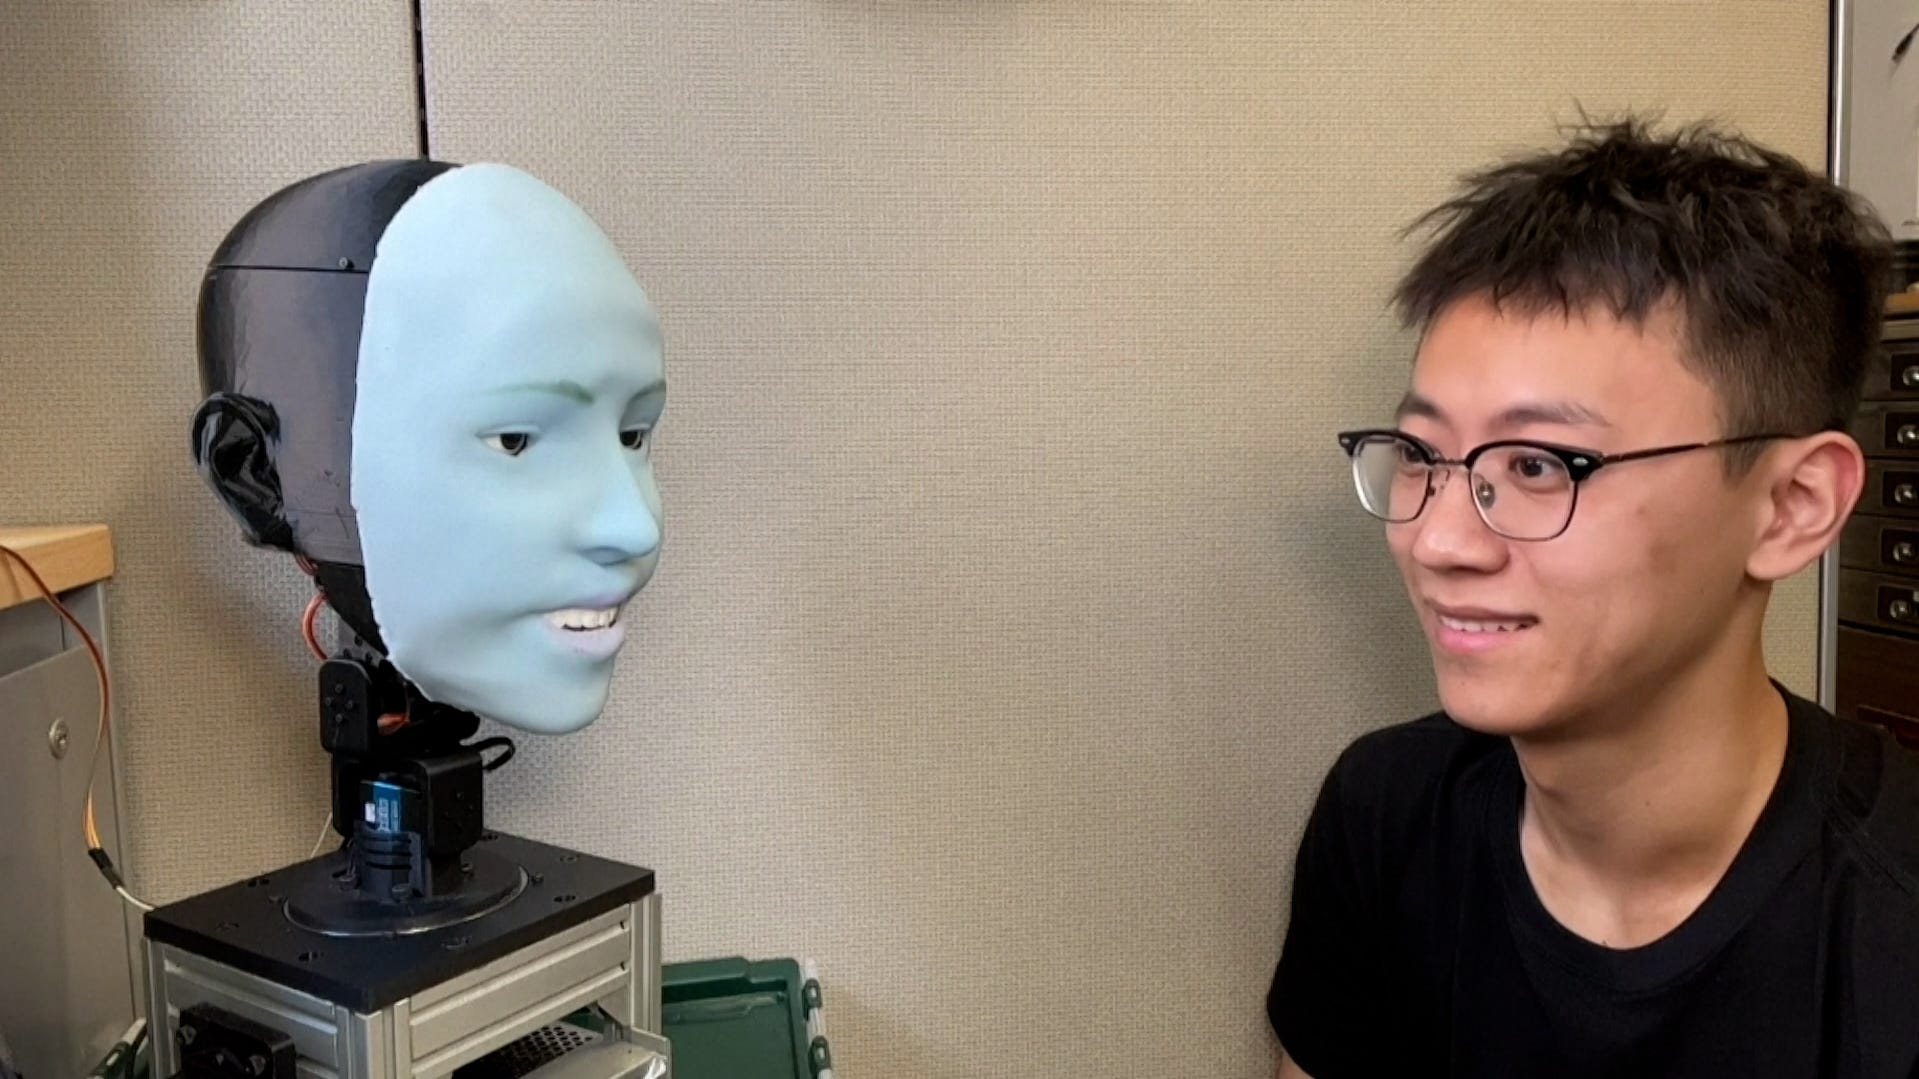 'Emo' robot can mimic human facial expressions using AI technology